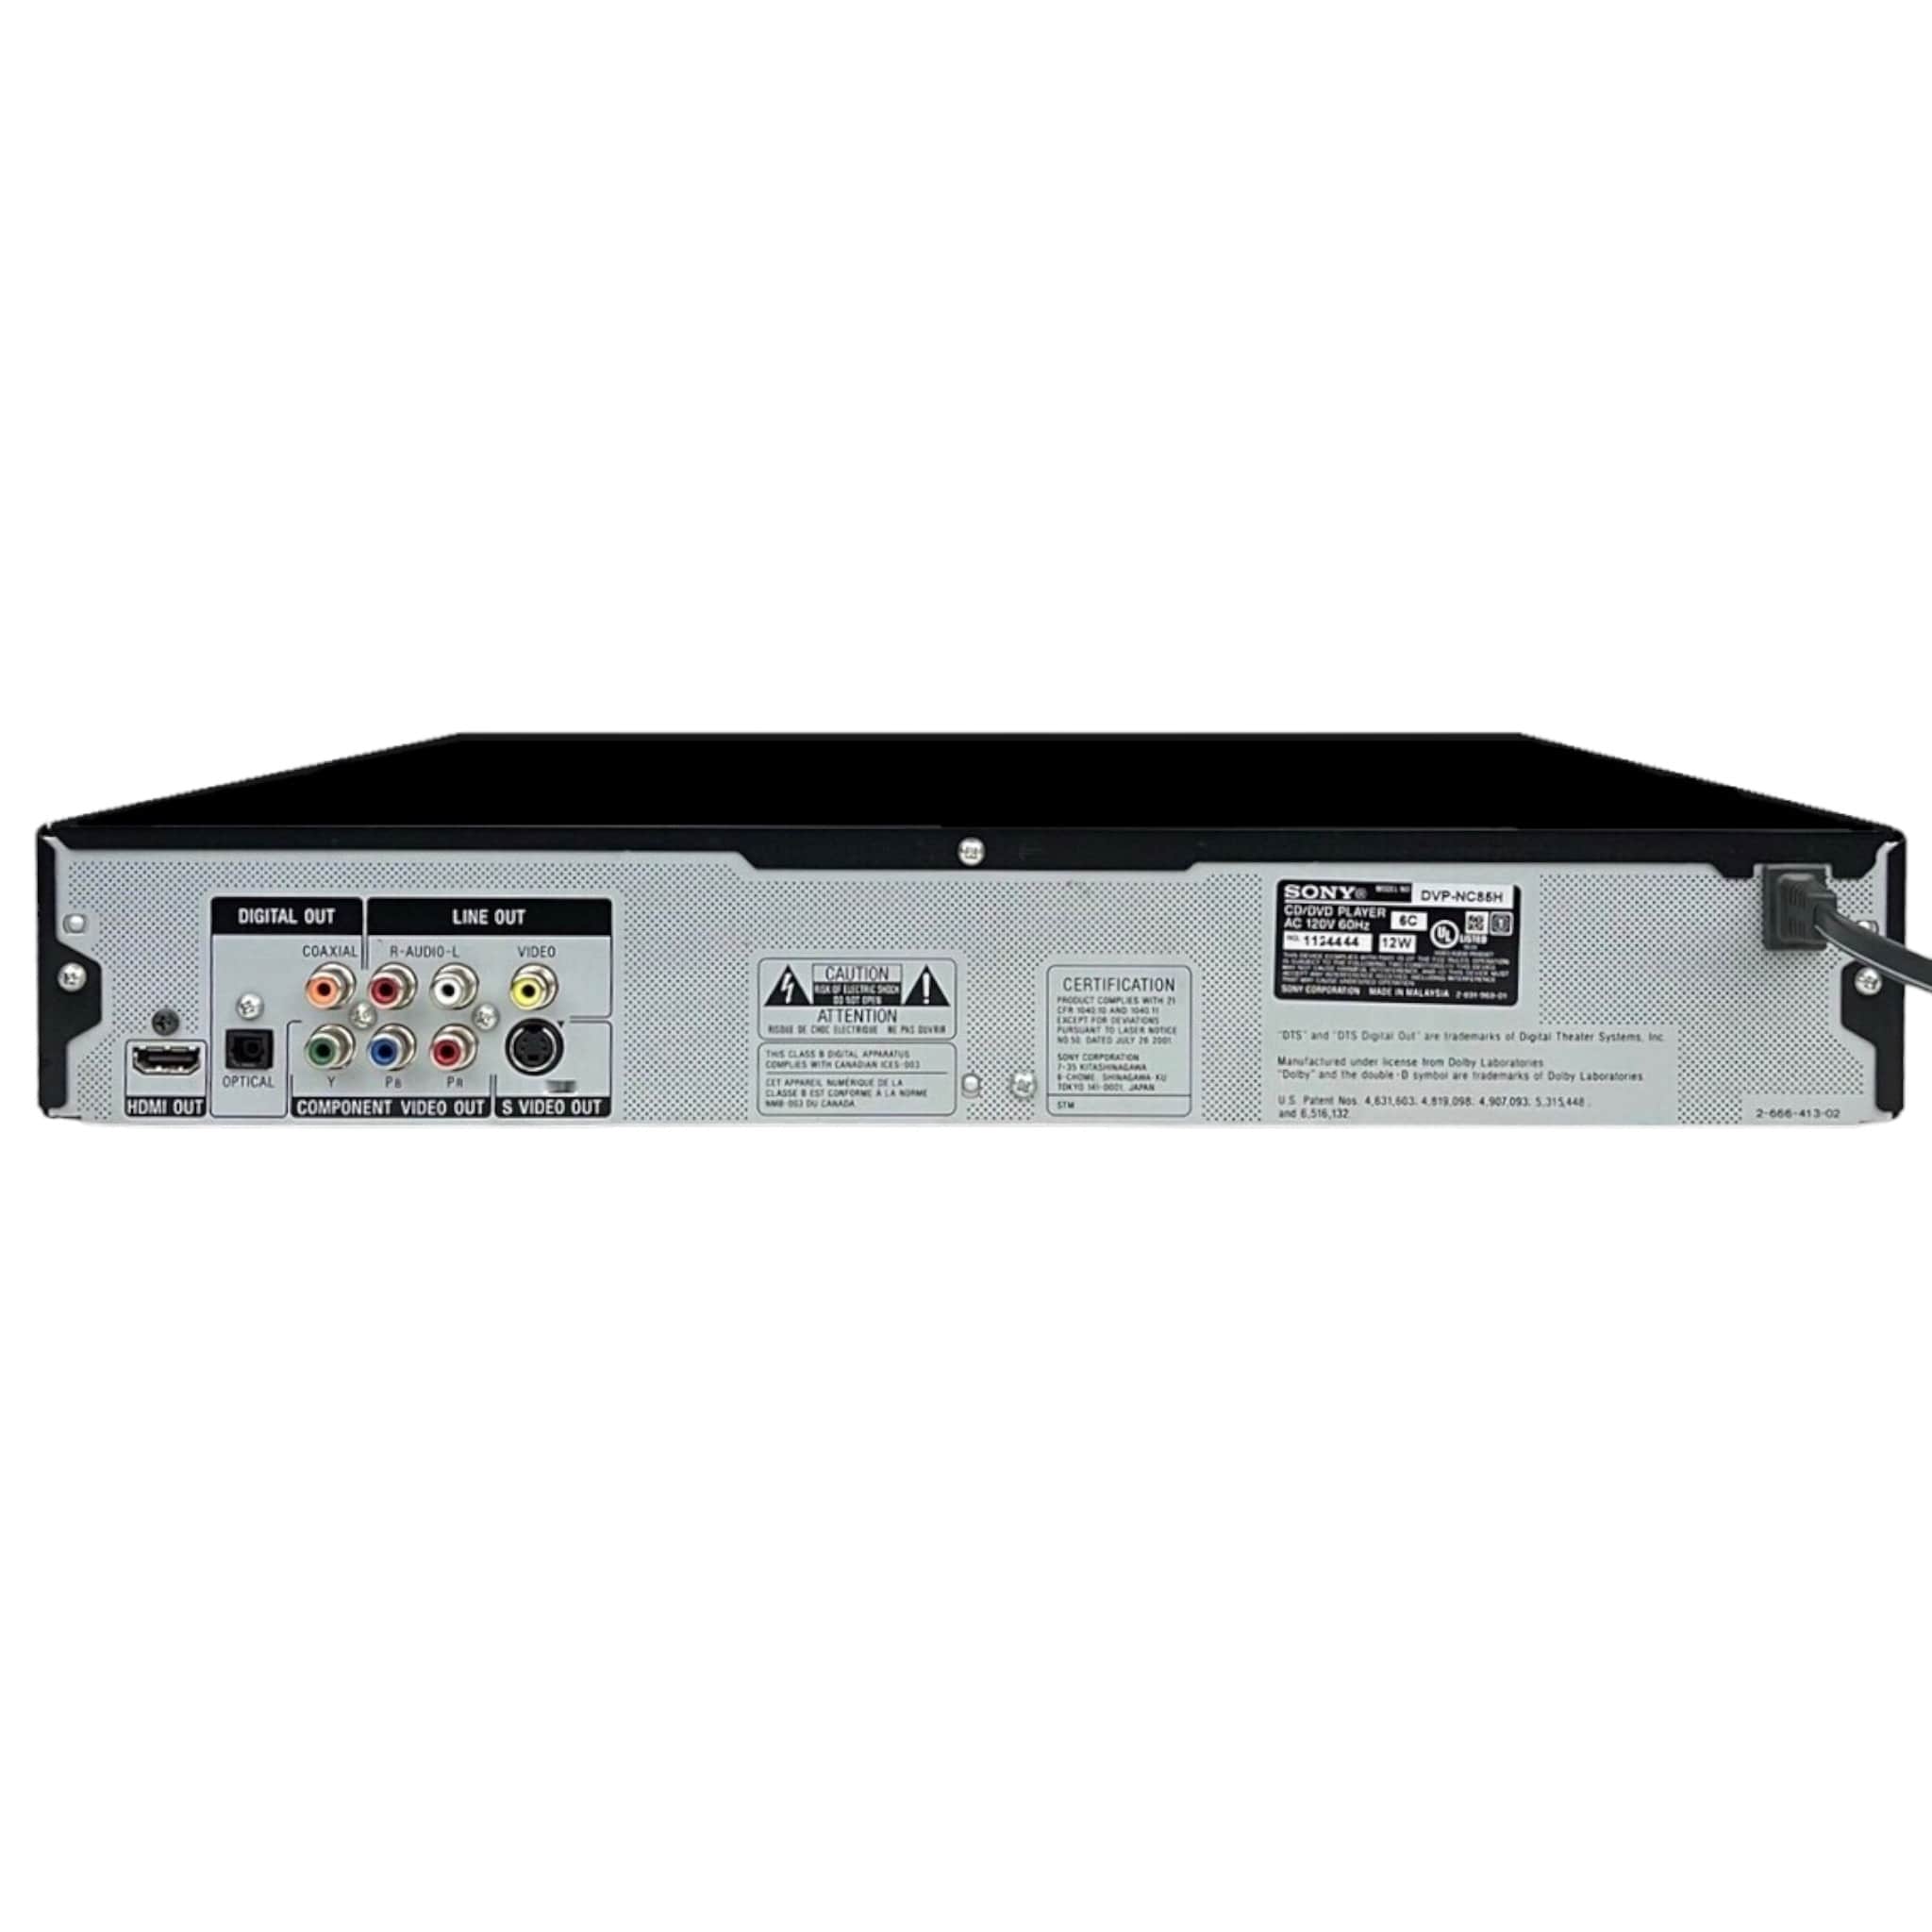 Sony DVP-K85PR DVD Player w/Karaoke DVPK85P/R B&H Photo Video